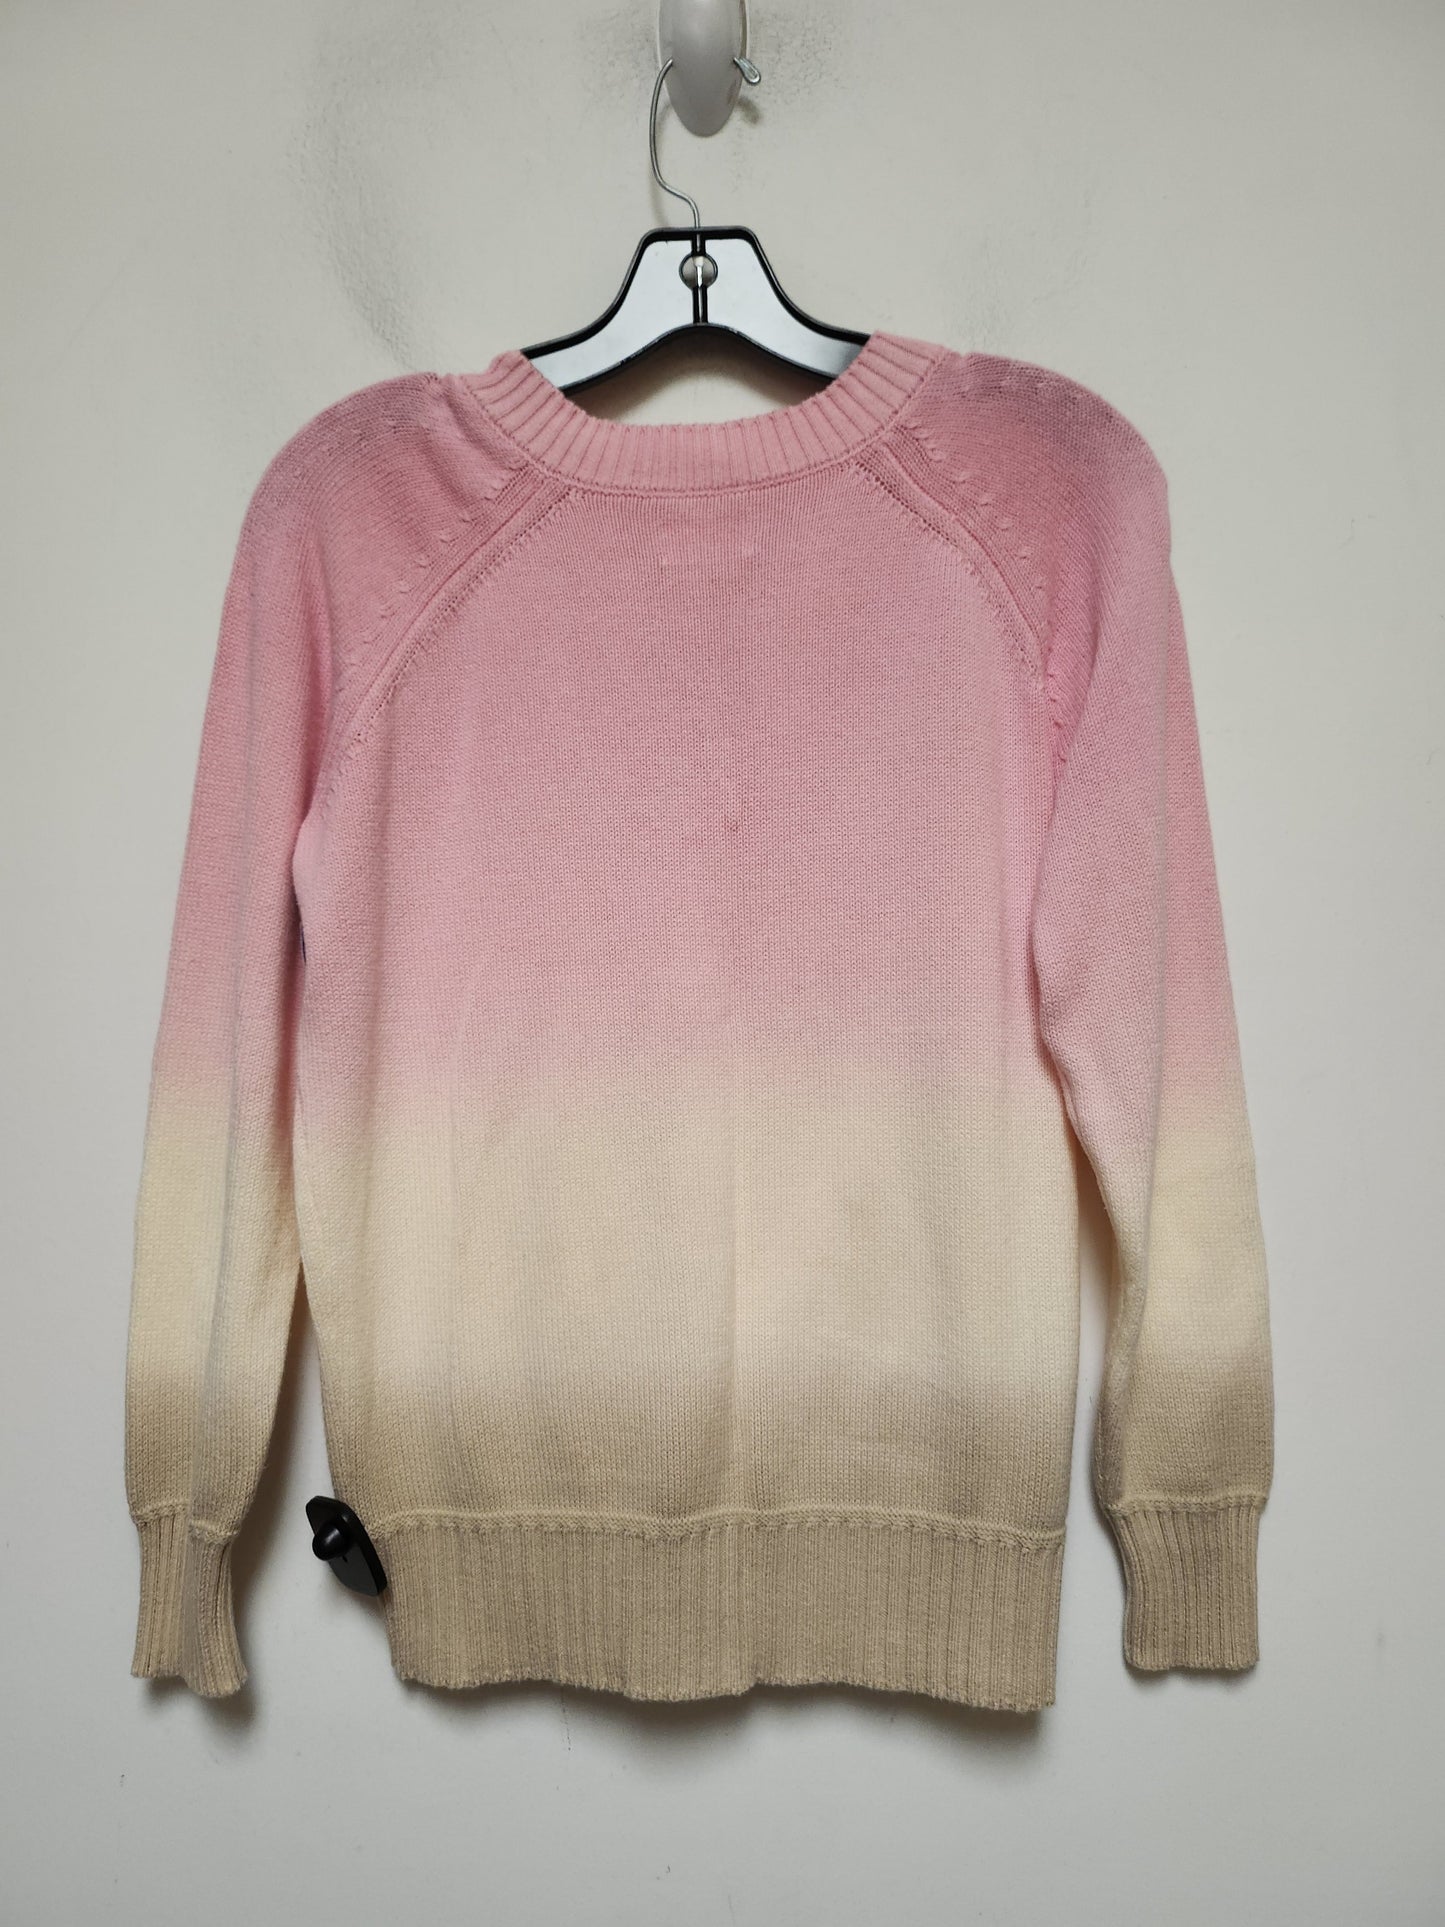 Pink & Tan Sweater Lou And Grey, Size Xxs